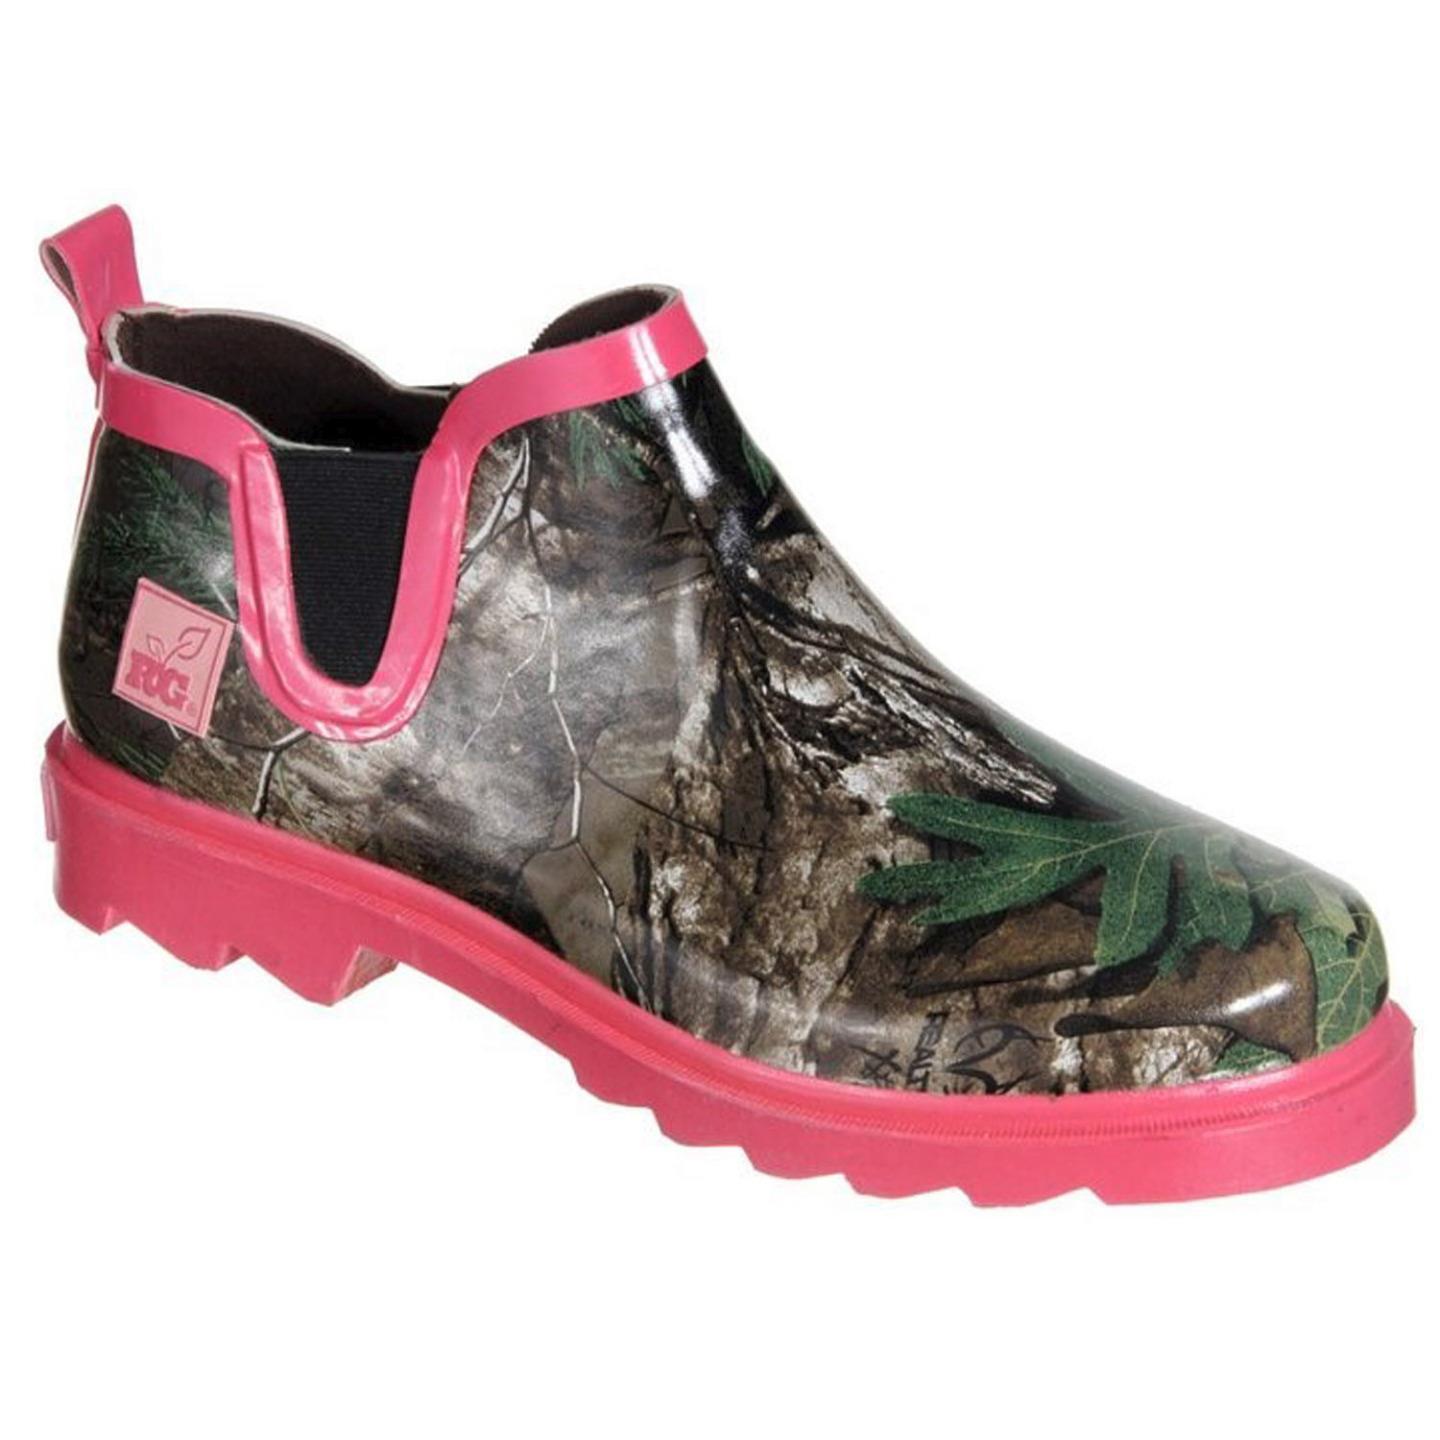 girls pink camo boots